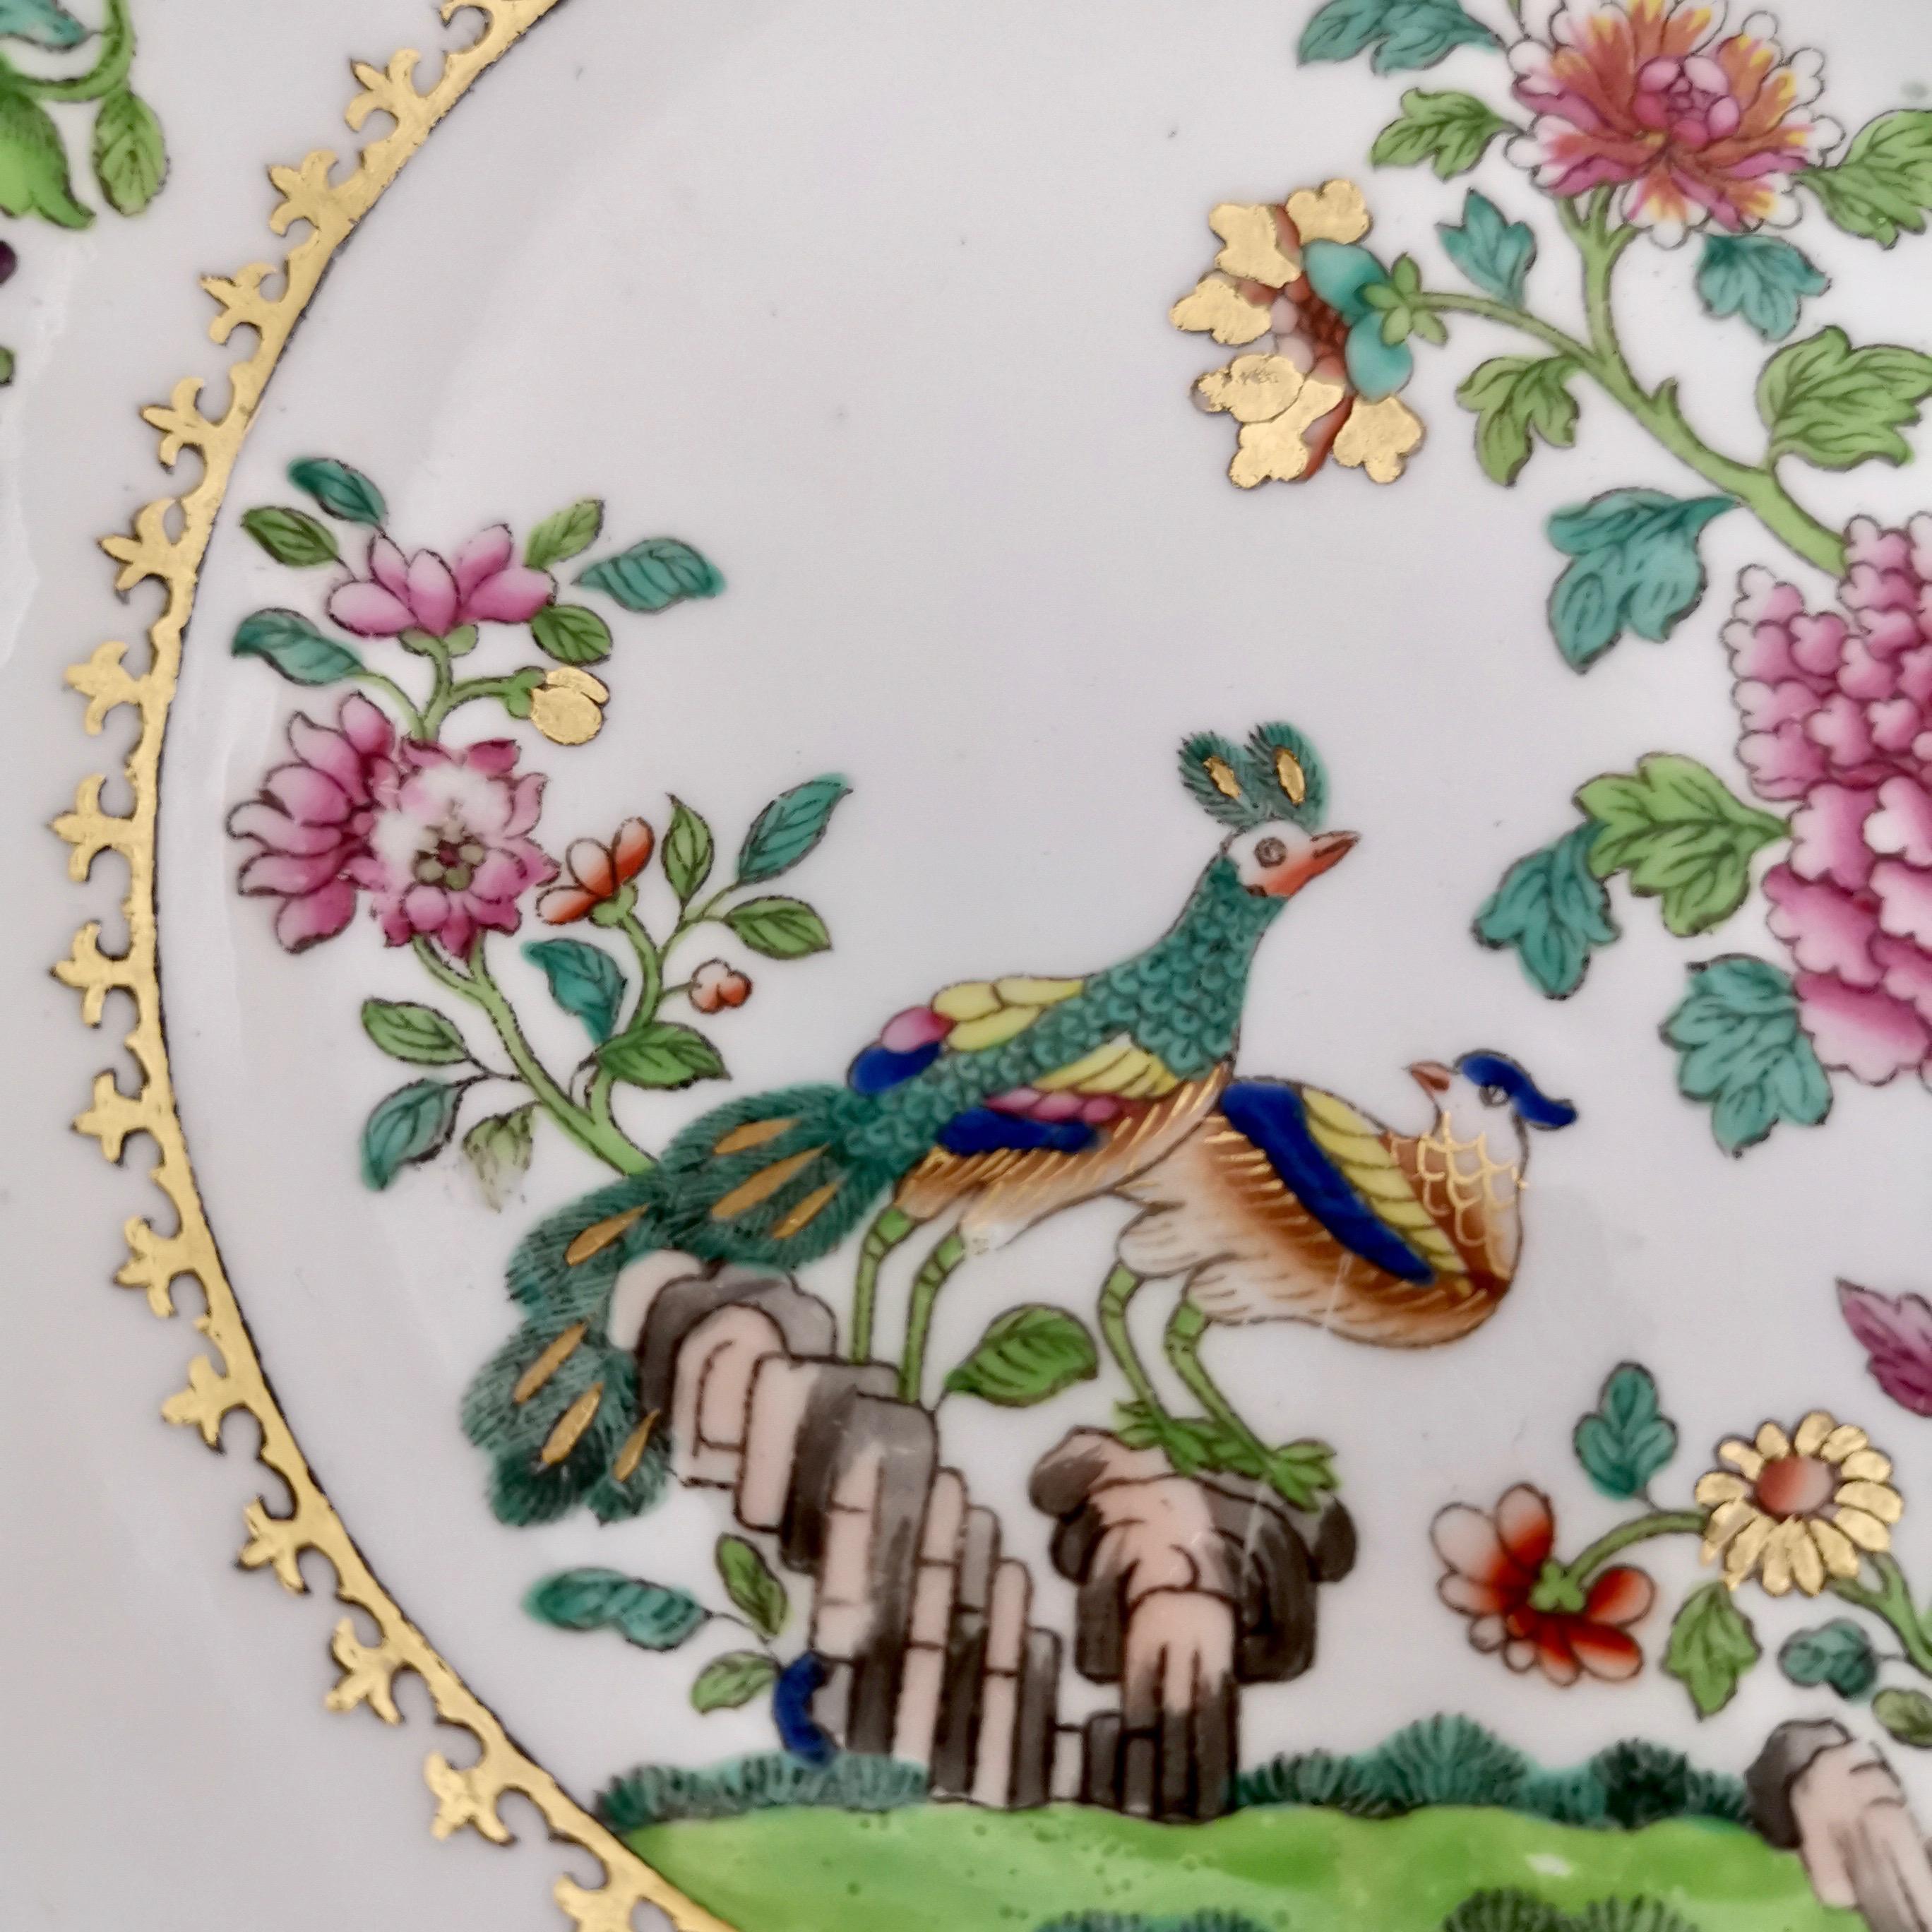 Early 19th Century Spode Porcelain Teacup Trio, Peacock Pattern 2083, Regency, 1814-1825